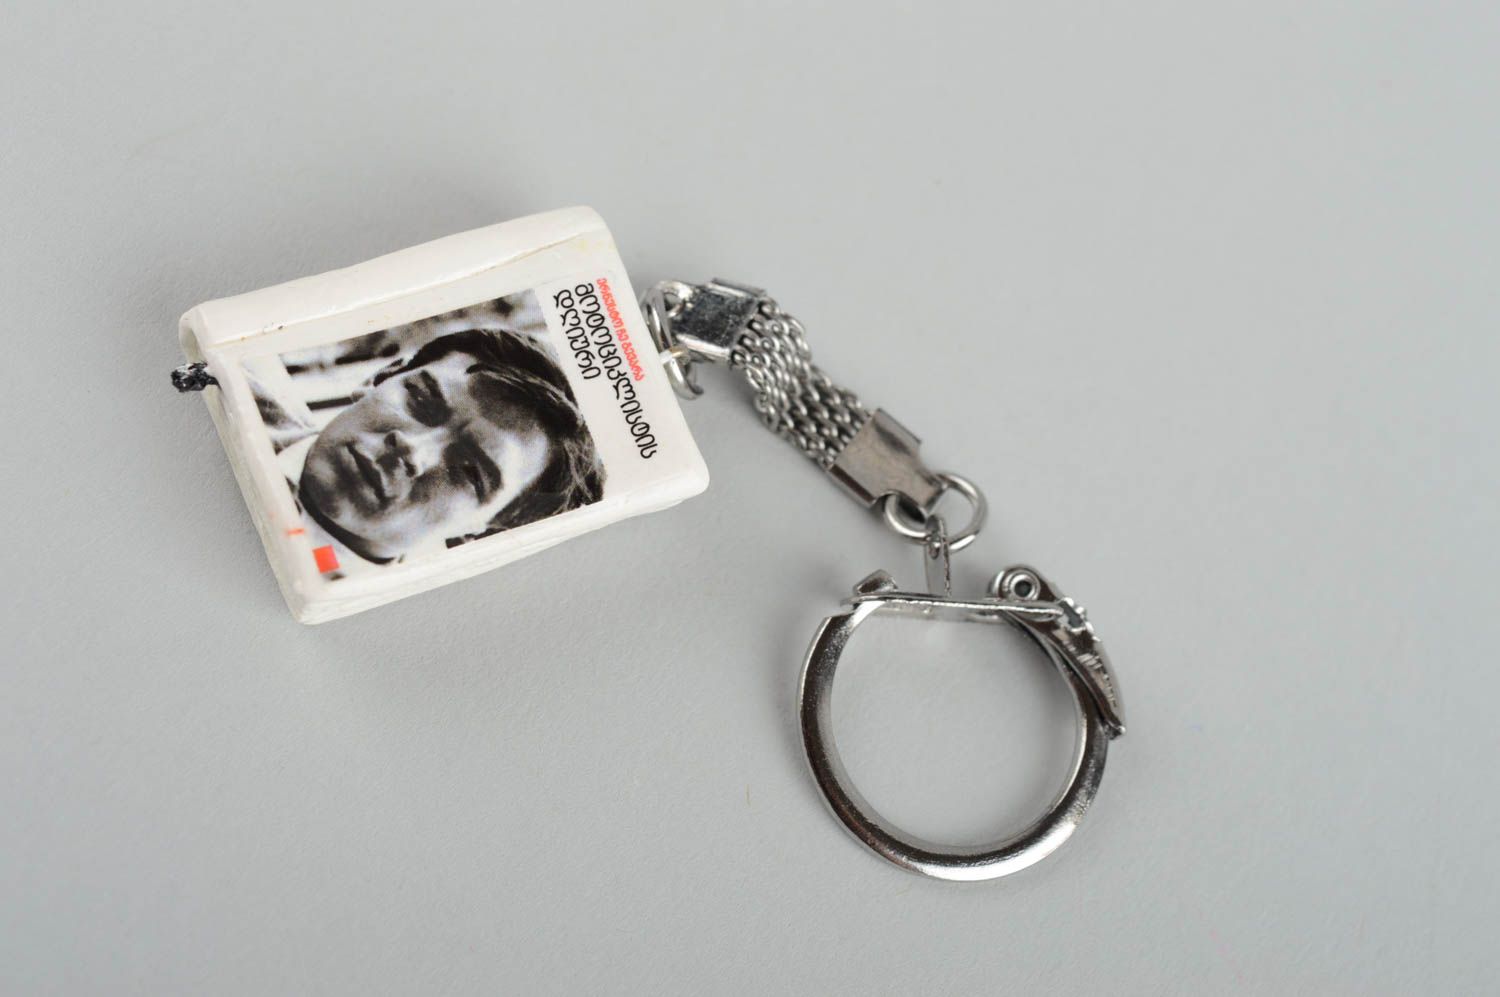 Handmade keychain designer keyrings handbag charm souvenir ideas cool gifts photo 3